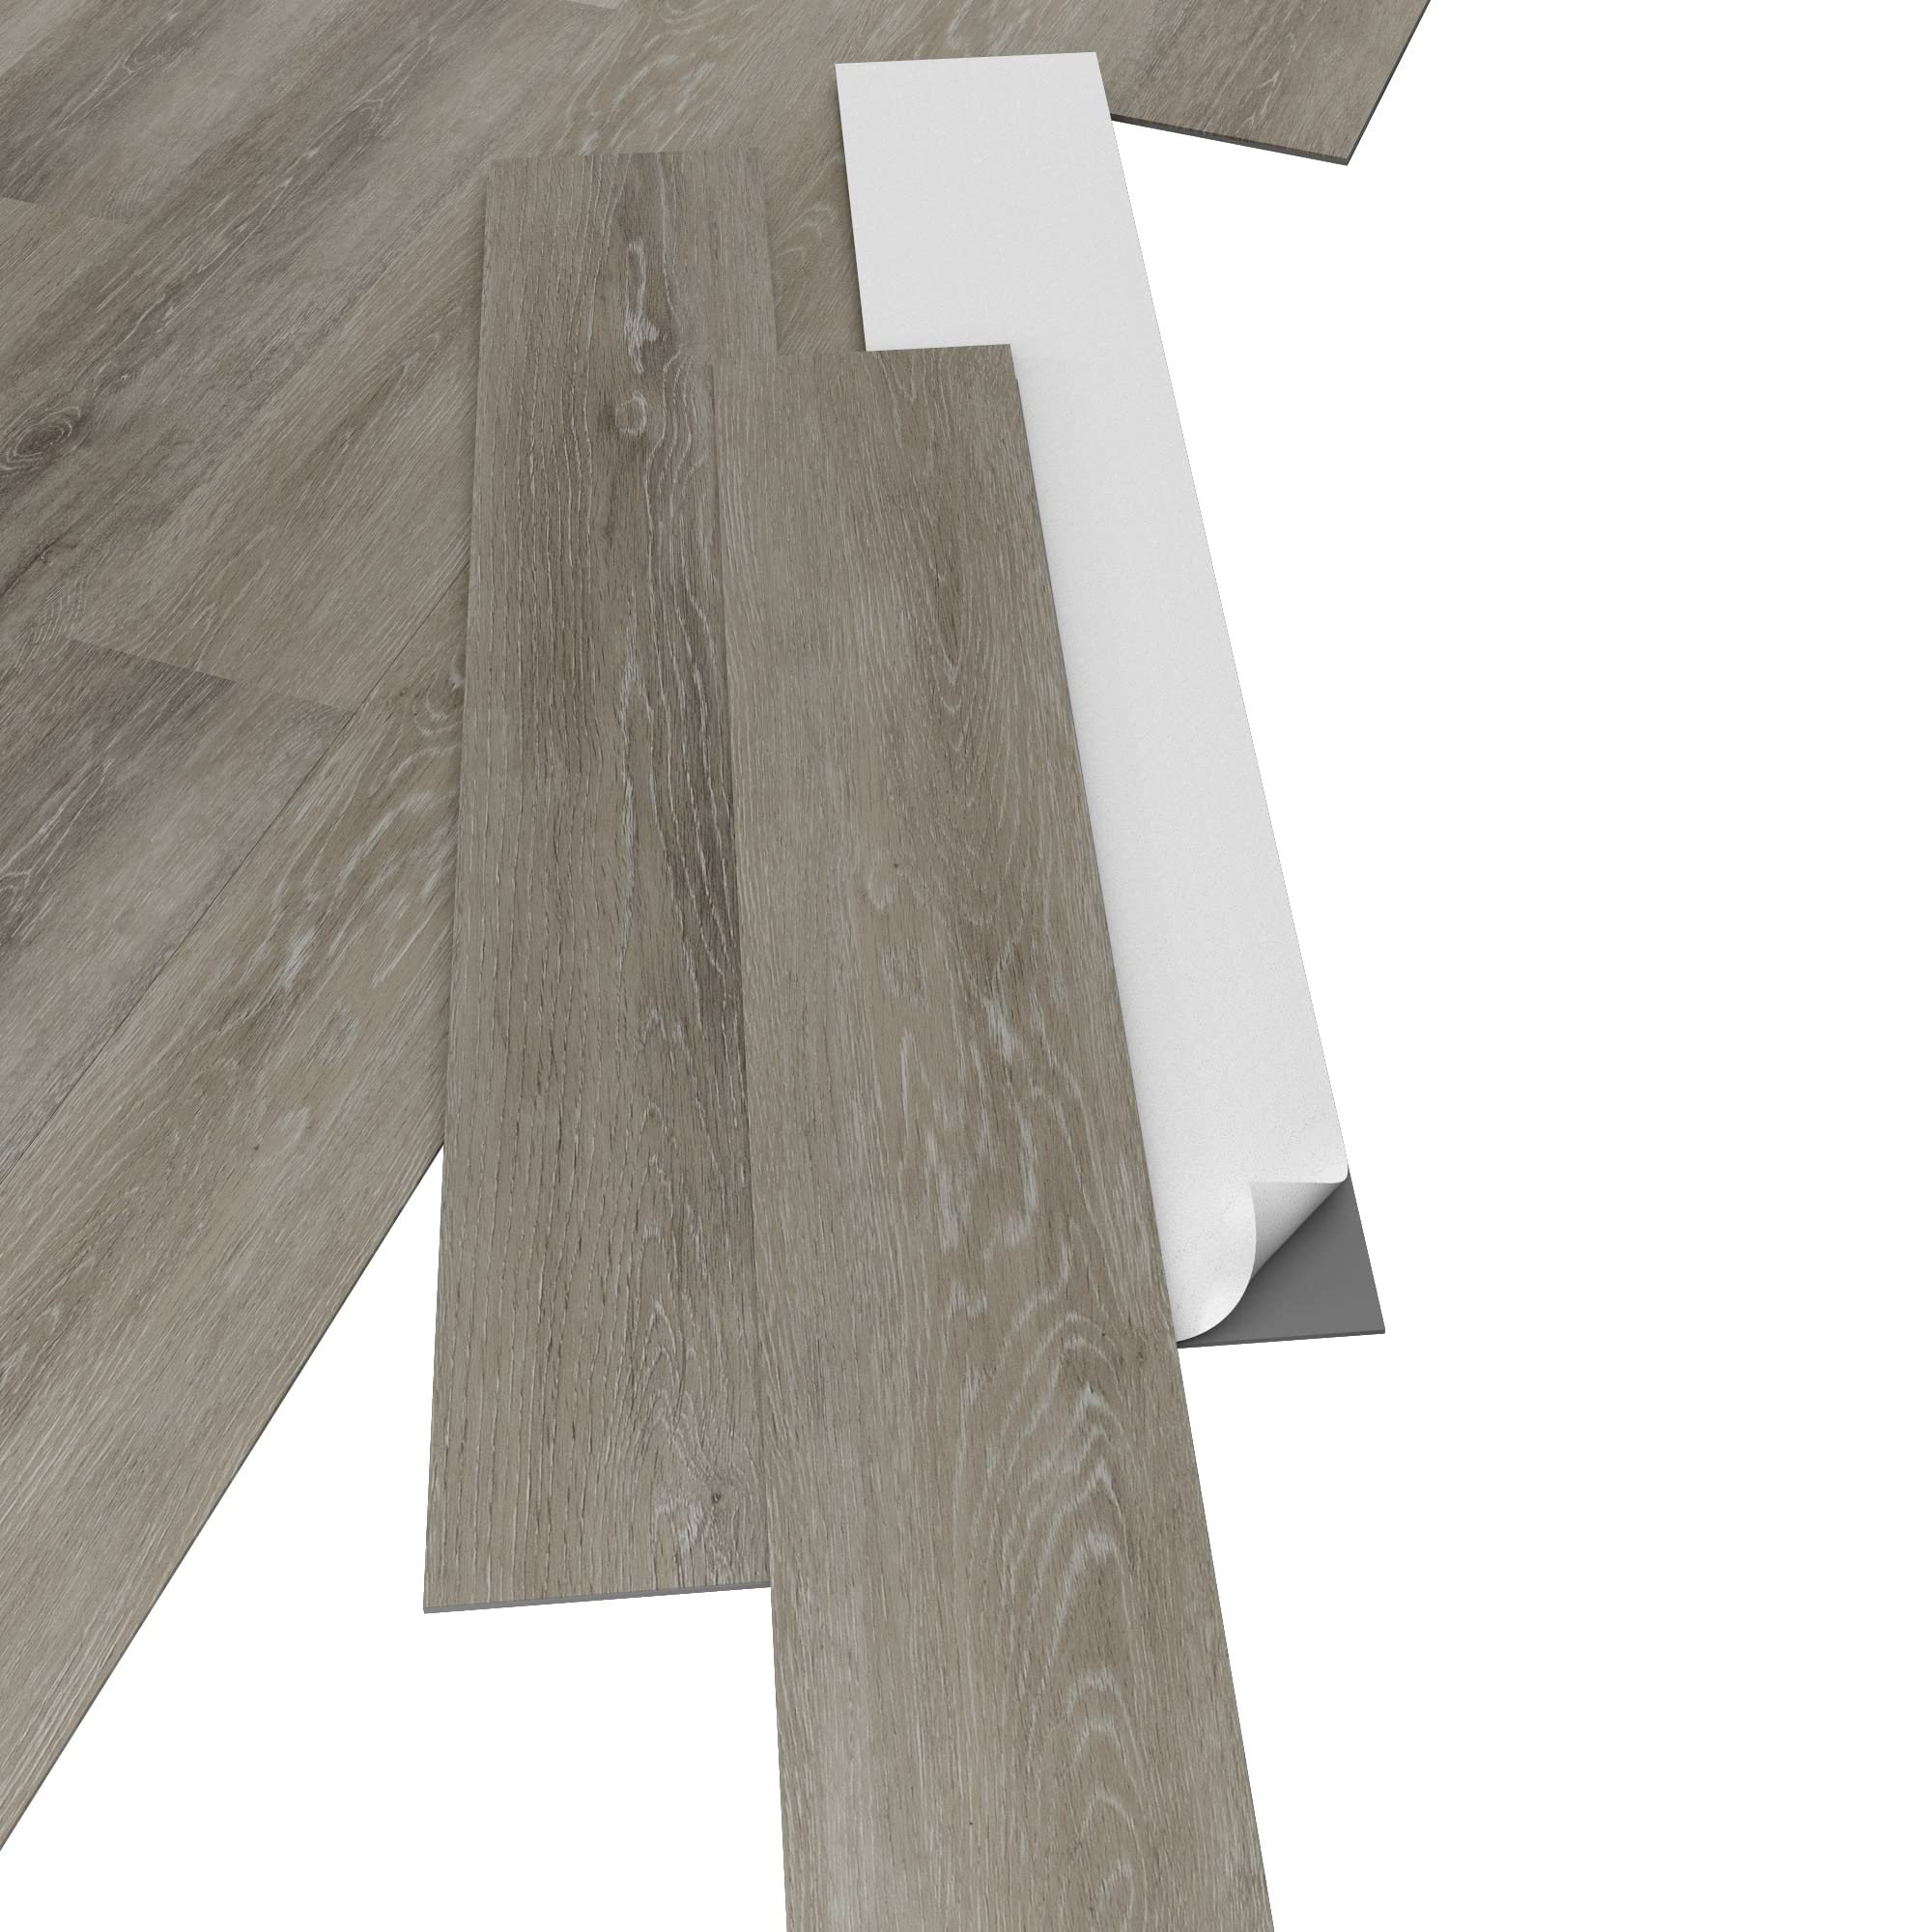 ARTENS - PVC Bodenbelag - Selbstklebende Dielen - FORTE- Helix - Dicke 2 mm - 2,23 m²/16 Dielen - Holzoptik - Parkett Effekt